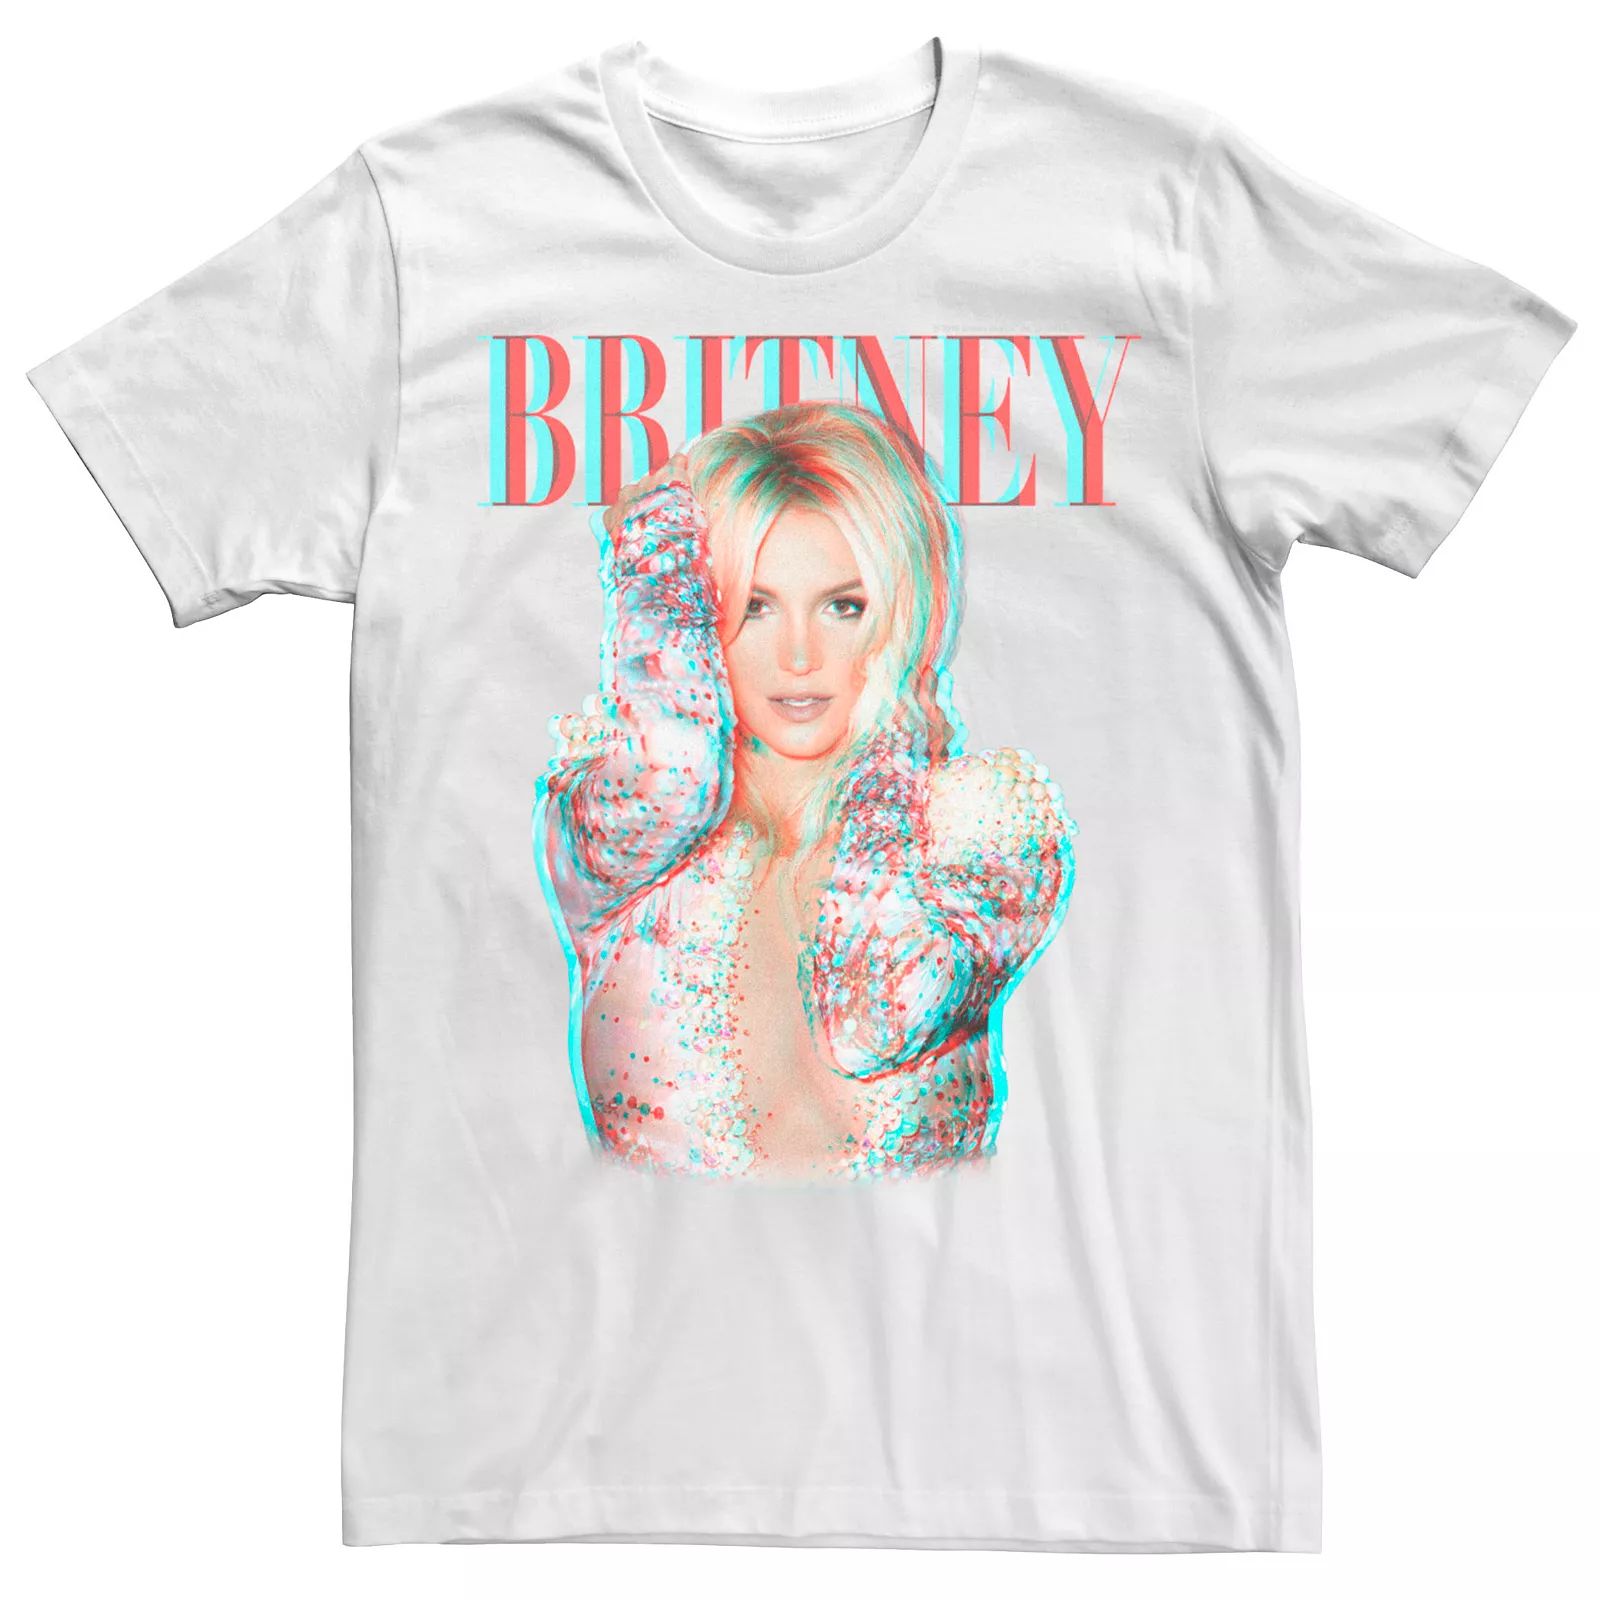 Men's Britney Spears Glitch Portrait Tee, Size: XL, White | Kohl's